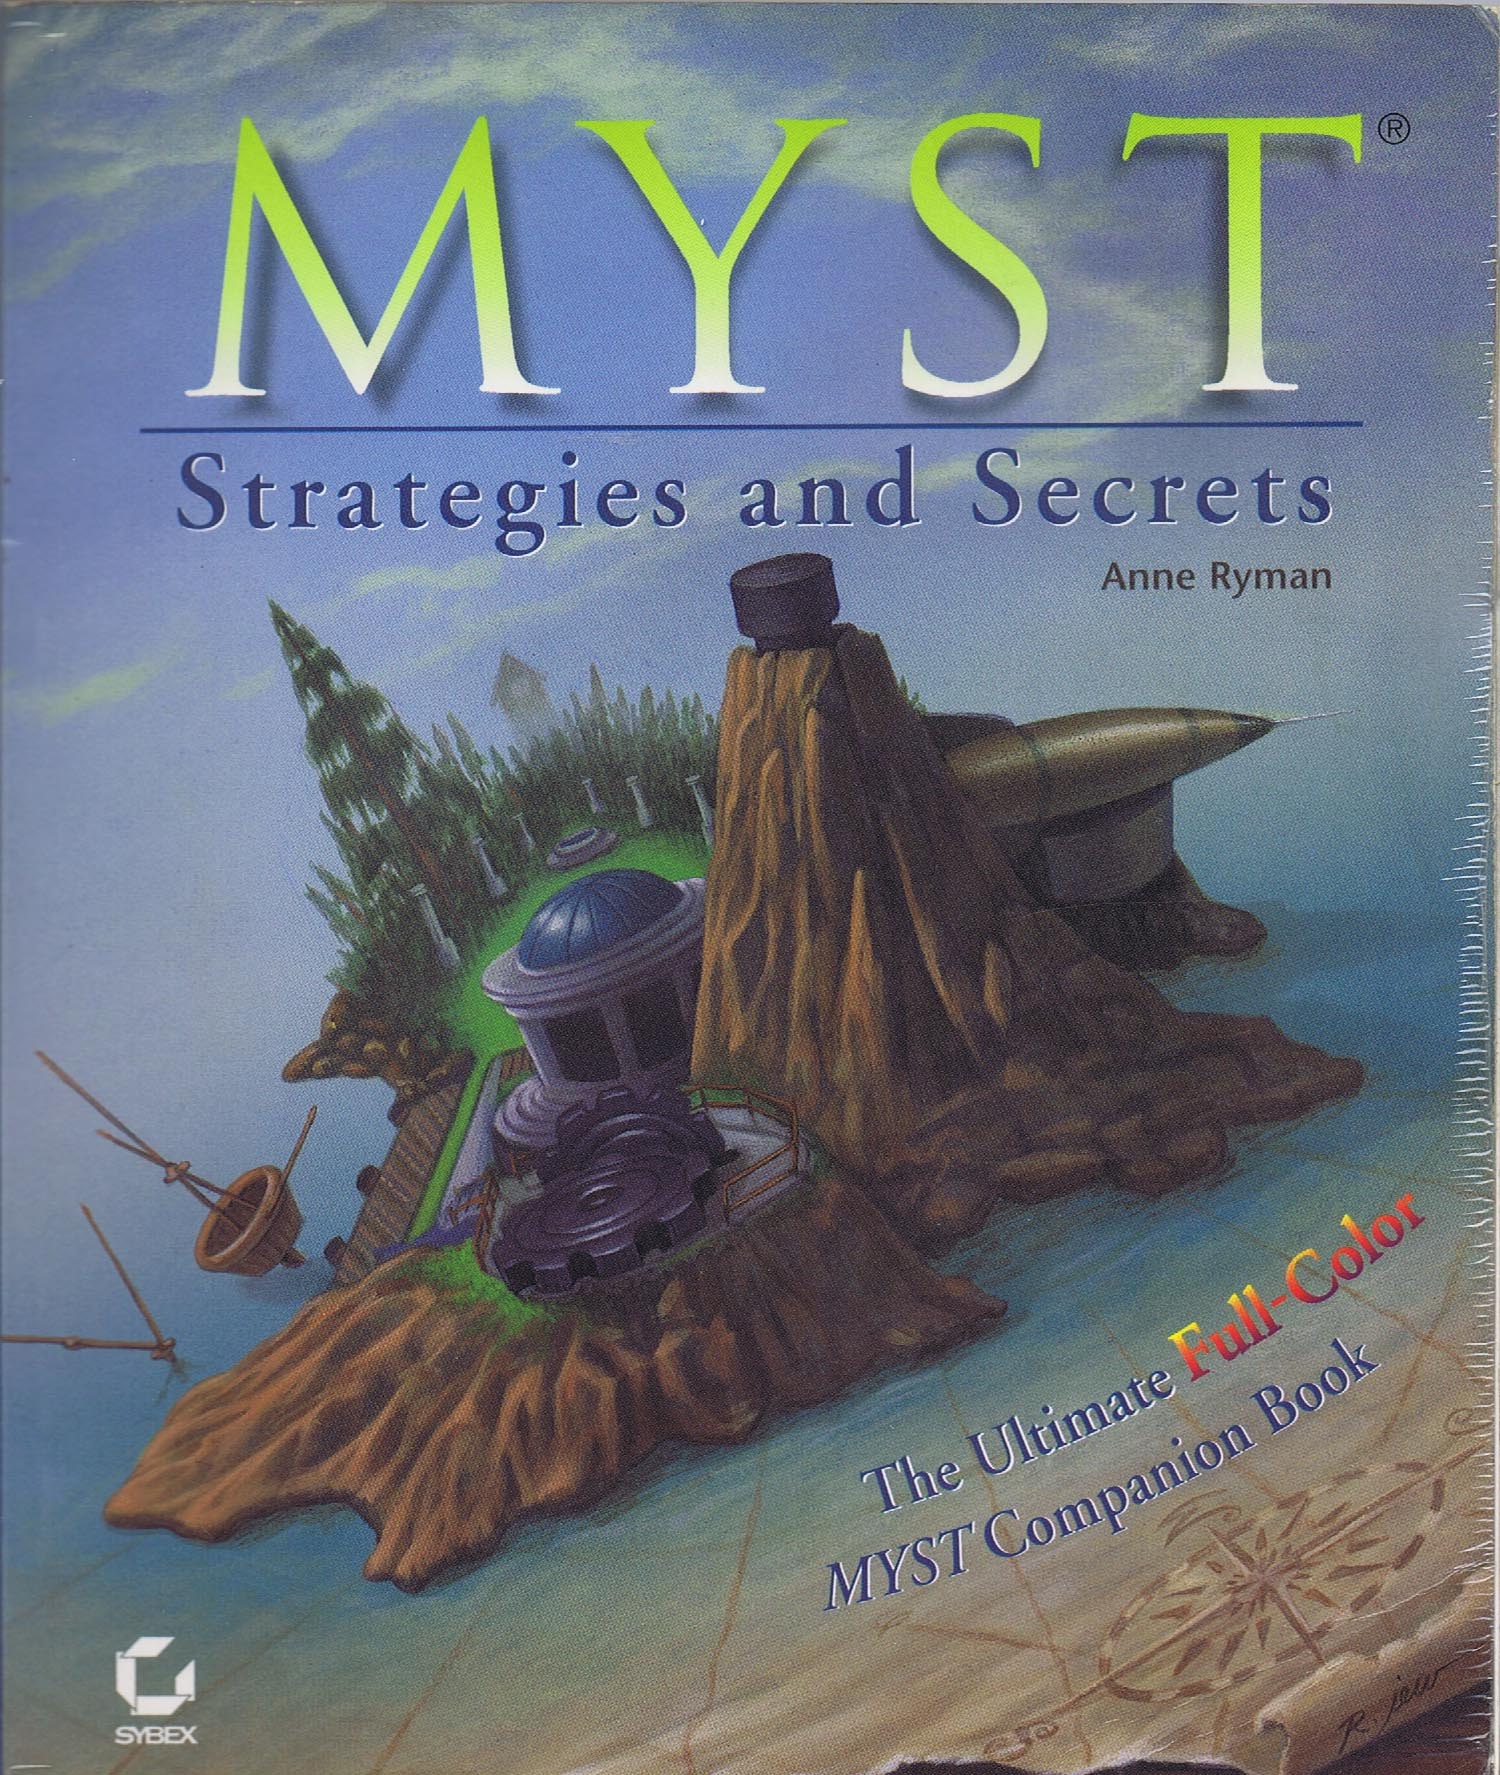 myst video game book series